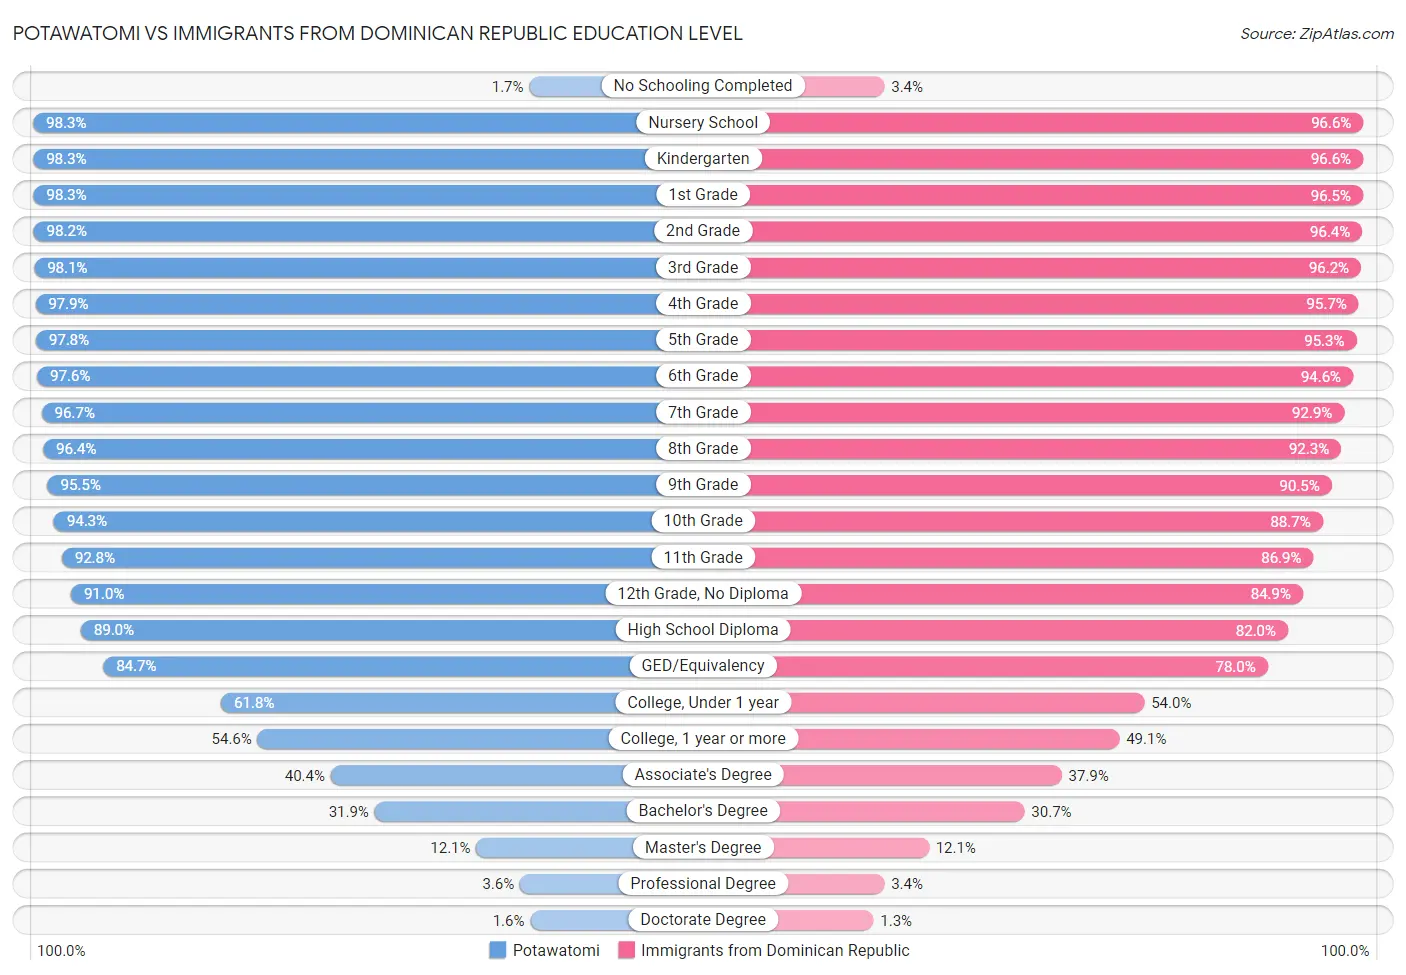 Potawatomi vs Immigrants from Dominican Republic Education Level